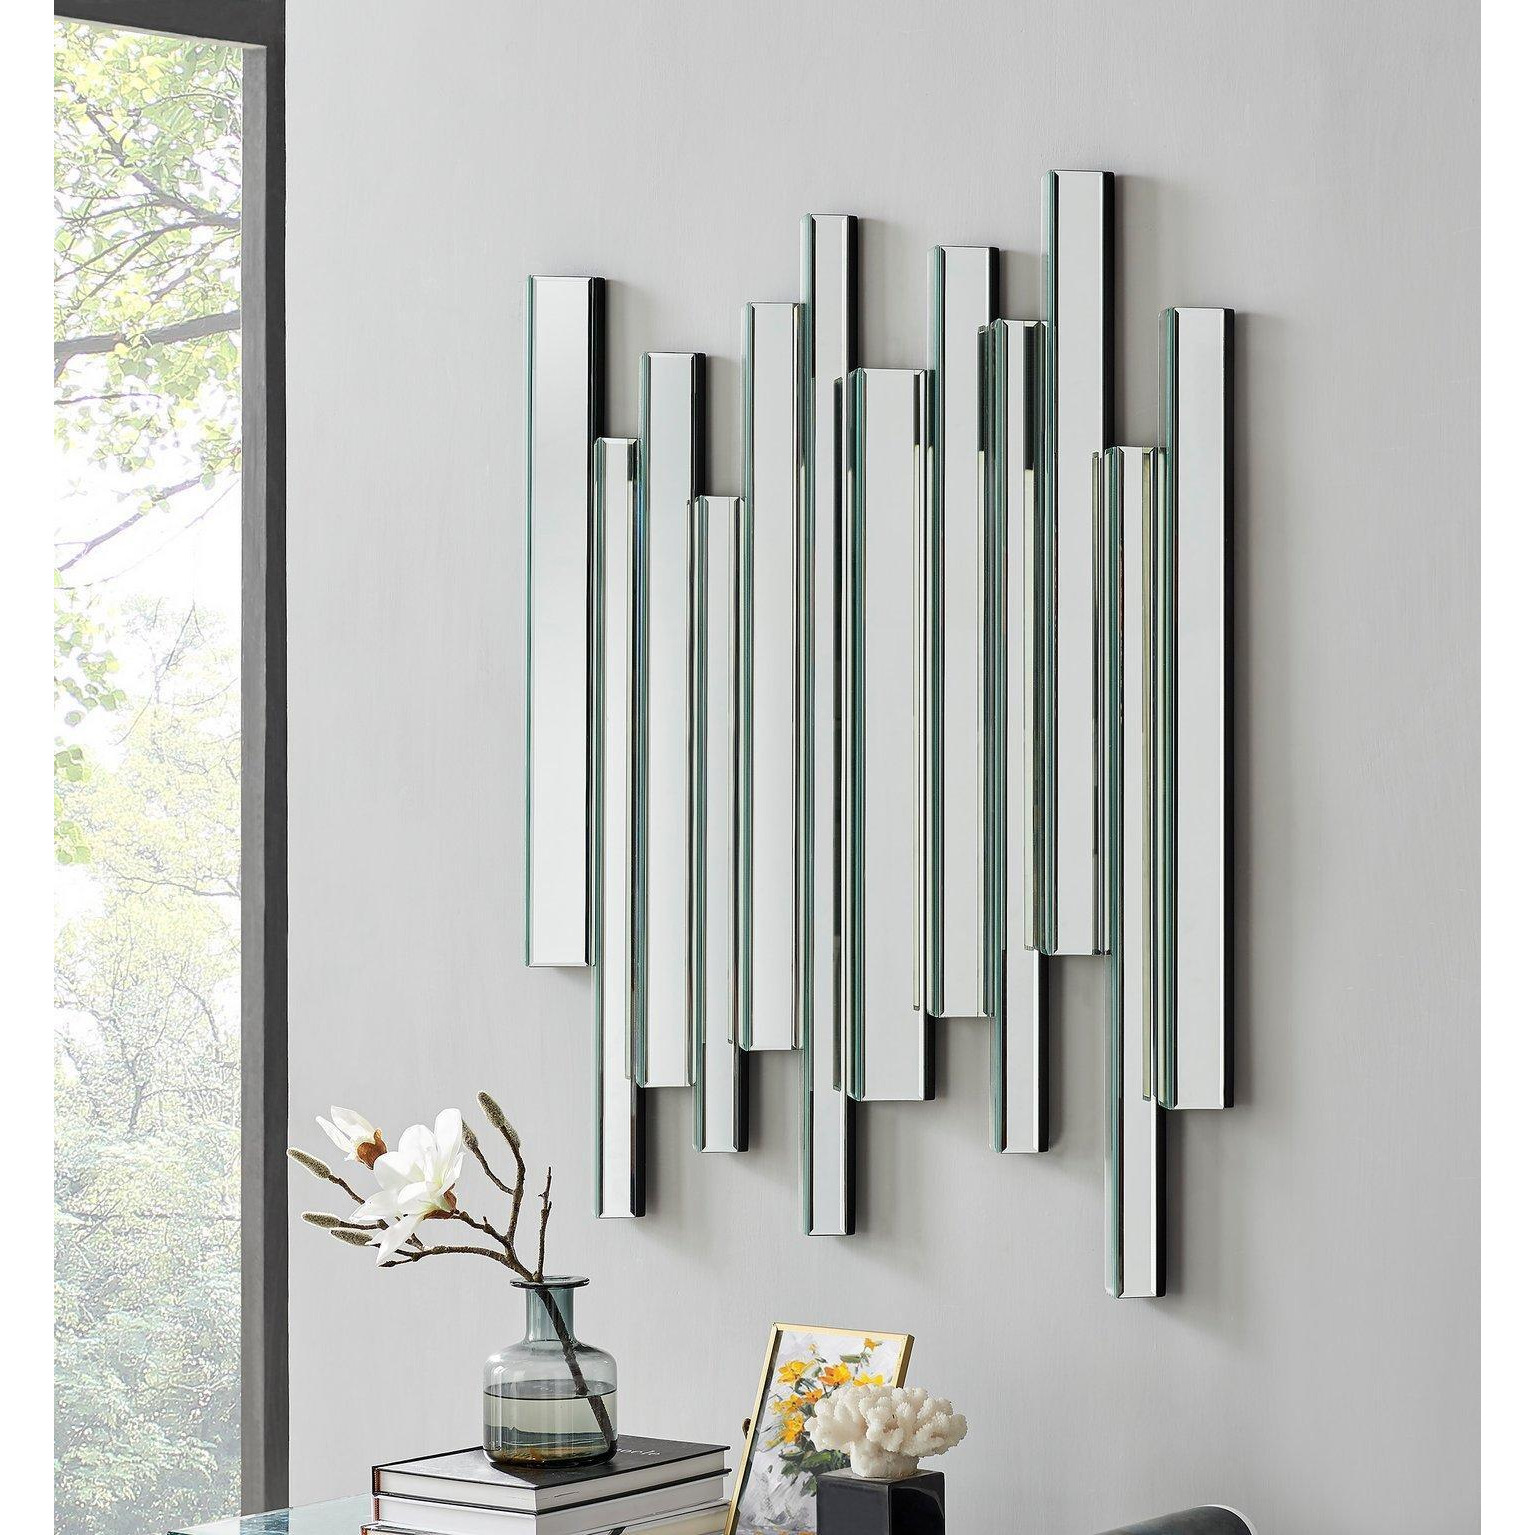 Crystalline Medium 100cm x 80cm Silver Mirrored Frame 3D Contemporary Modern Hallway Bedroom Living Room Wall Mirror - image 1